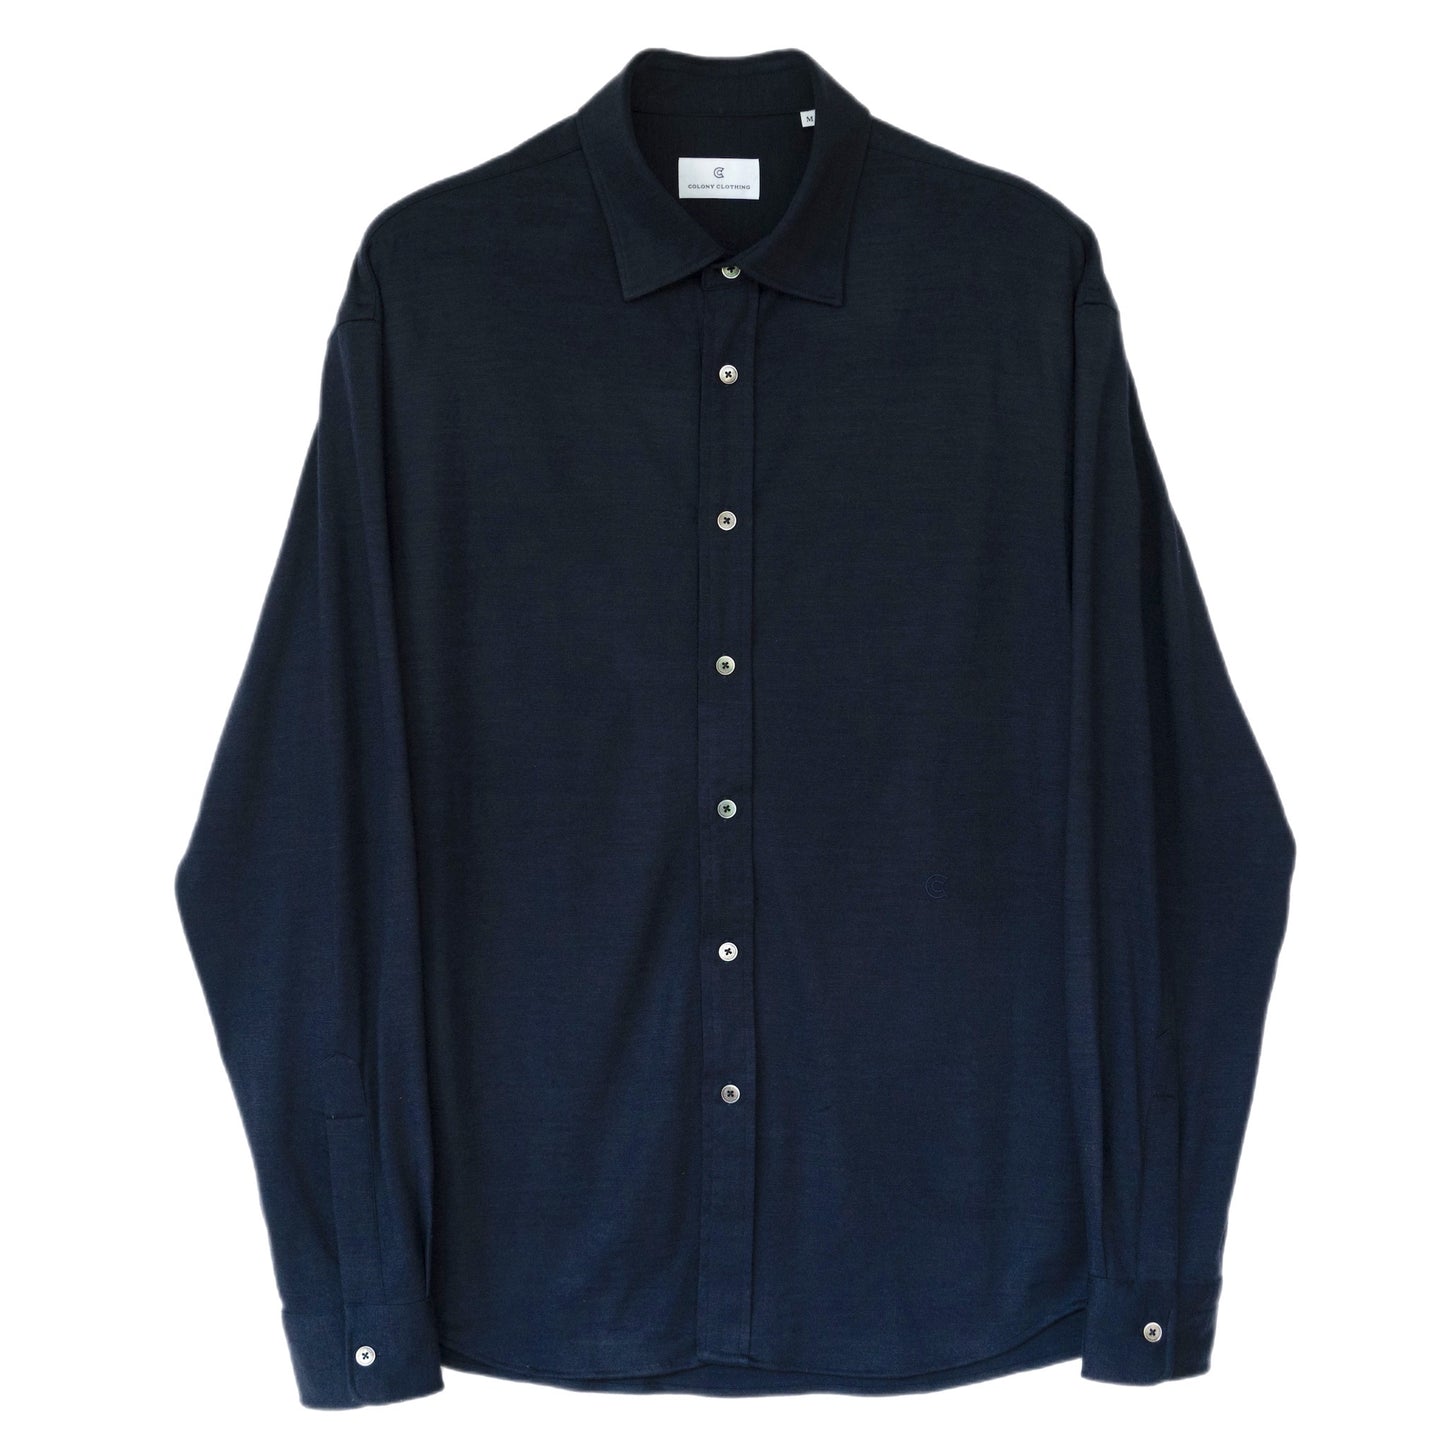 COLONY CLOTHING / ウールジャージ ラウンジシャツ / CC2202-SH02-2